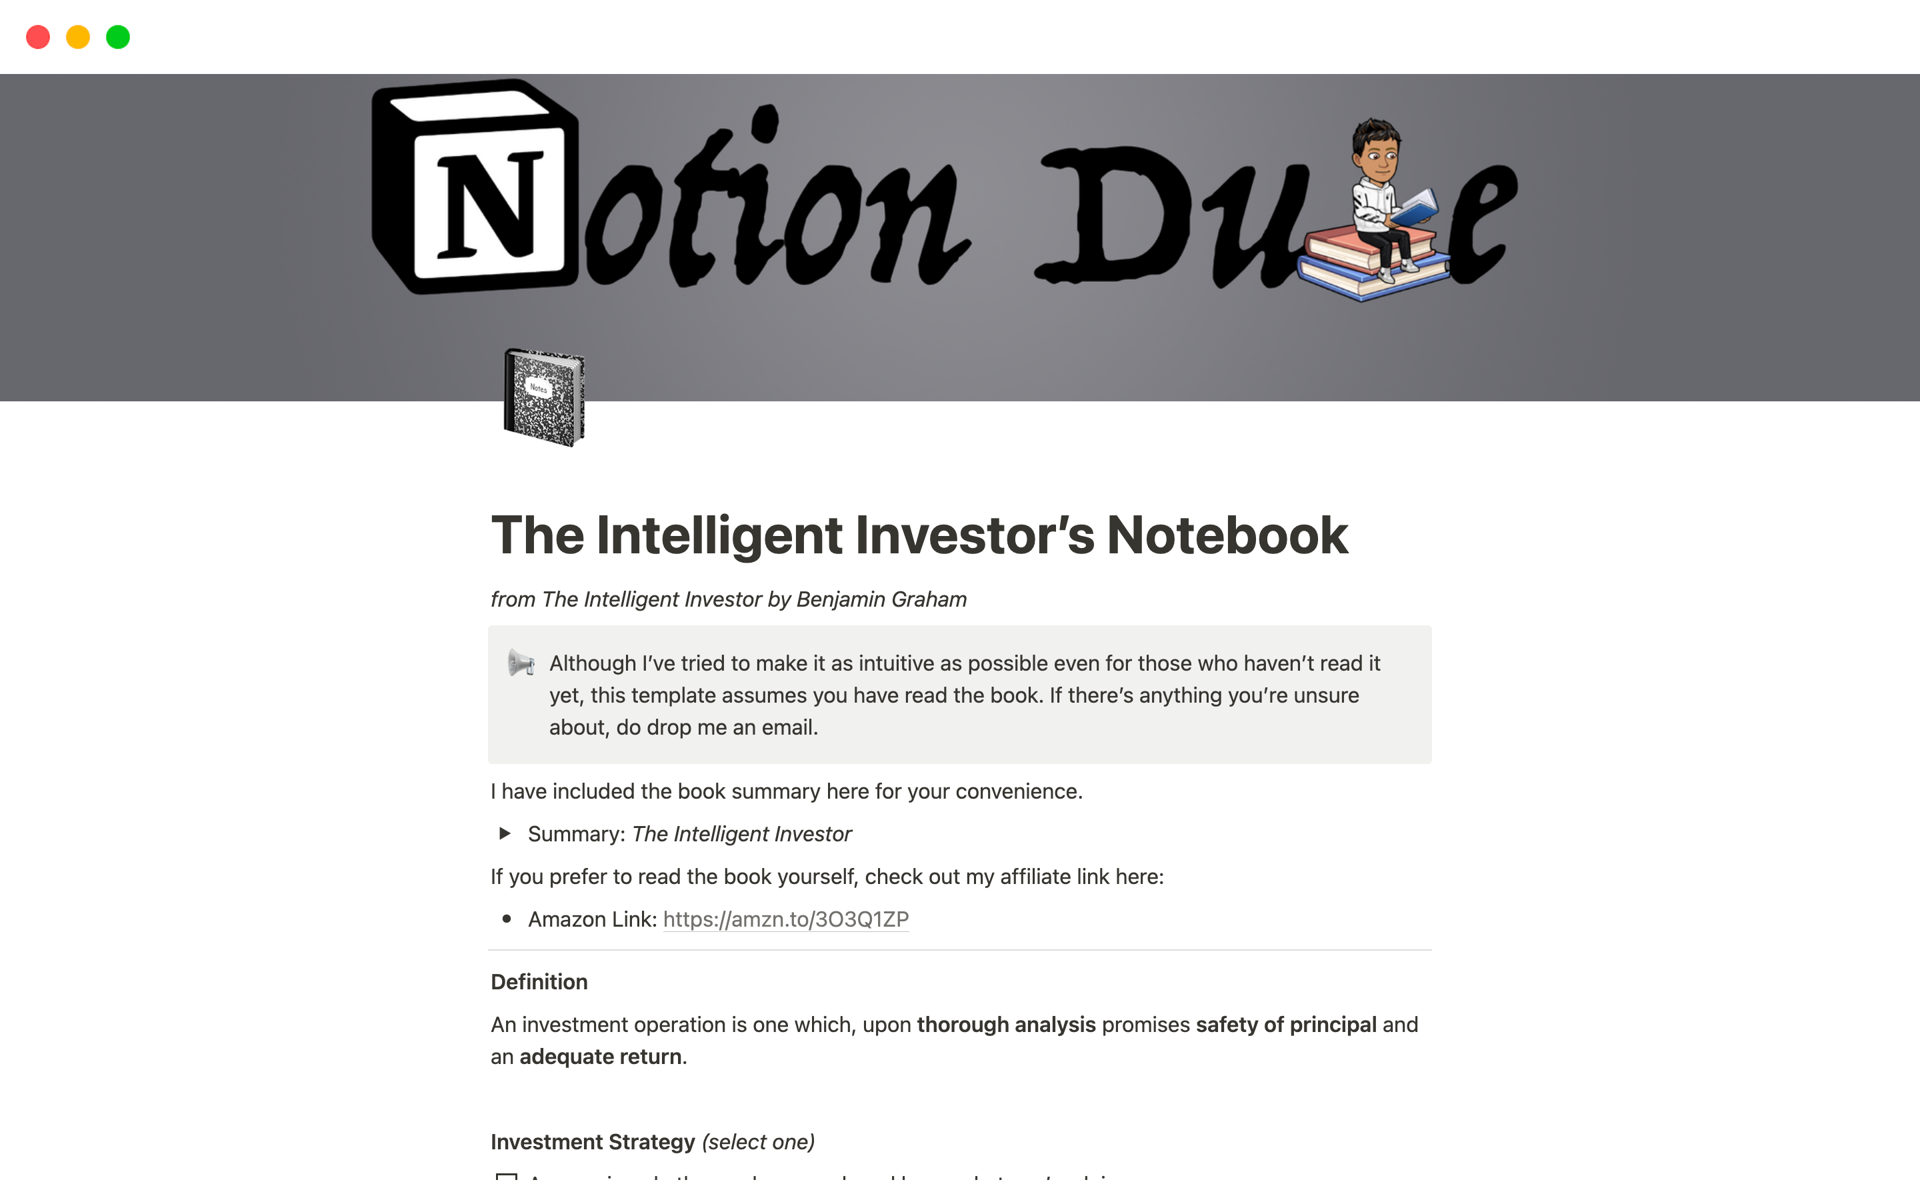 The Intelligent Investor's Notebook